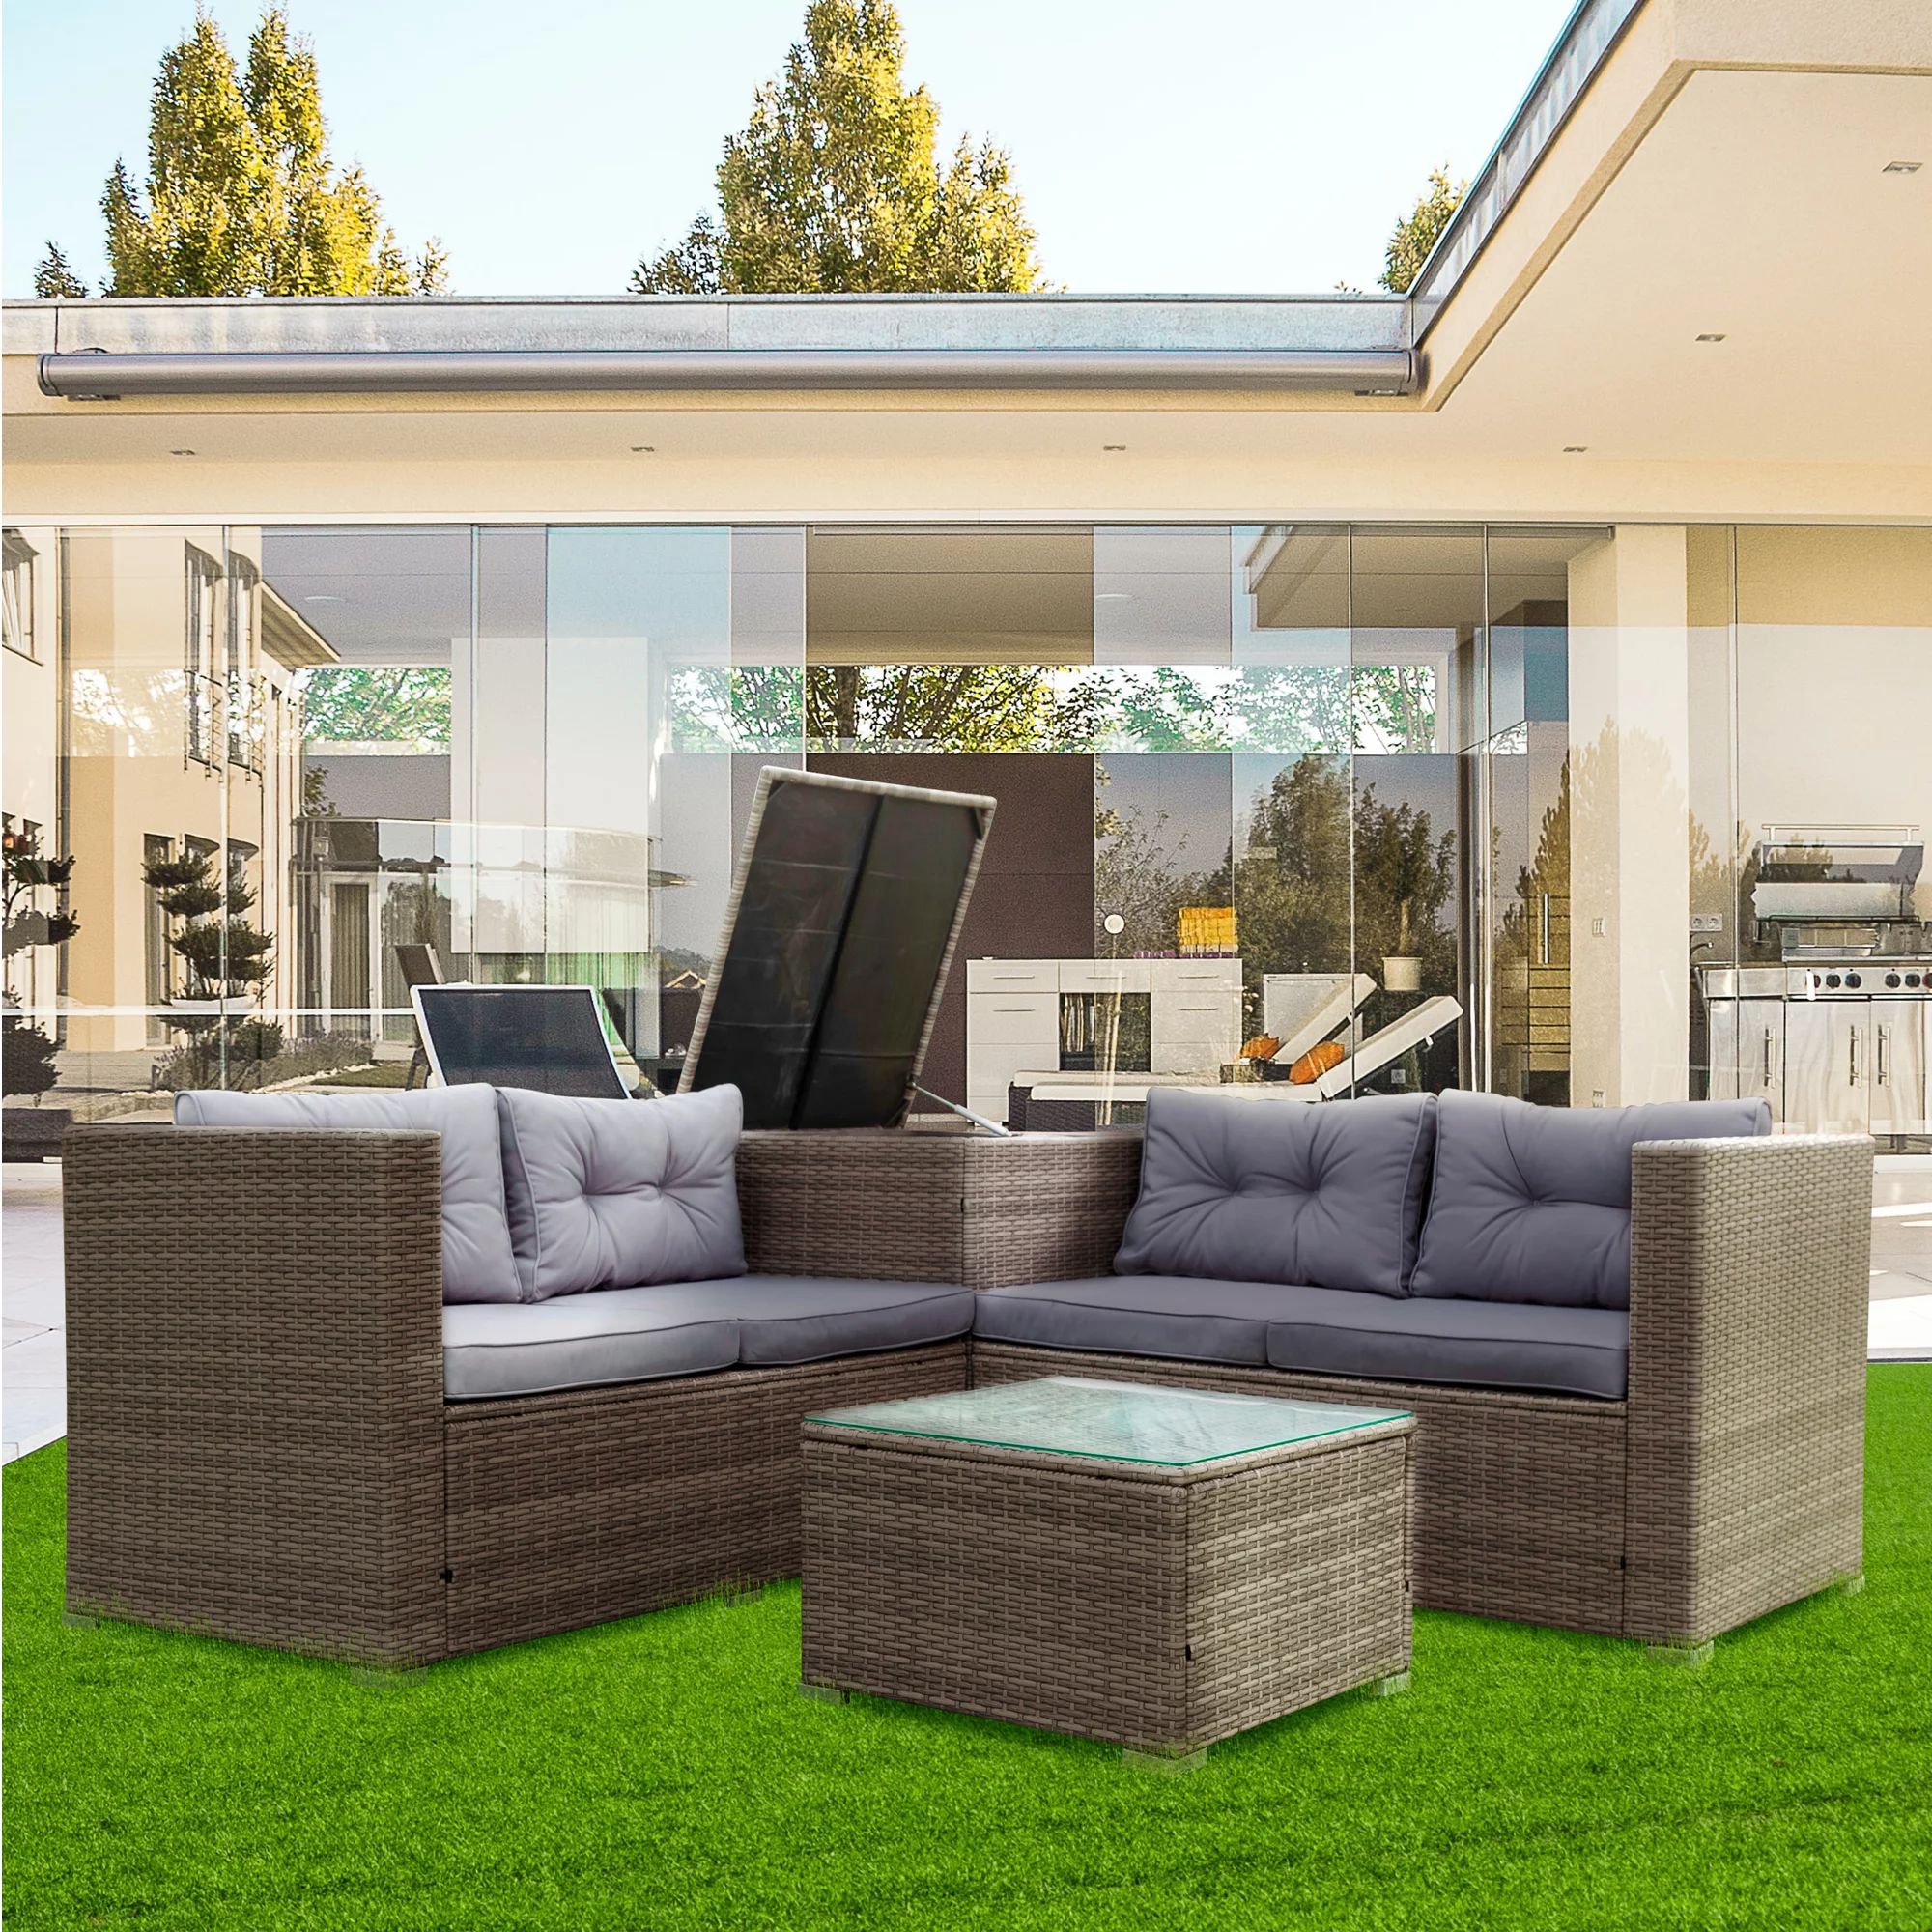 4 Piece Patio Furniture Sets, Patio Sectional Wicker Rattan Outdoor Furniture Sofa Set with Stora... | Walmart (US)